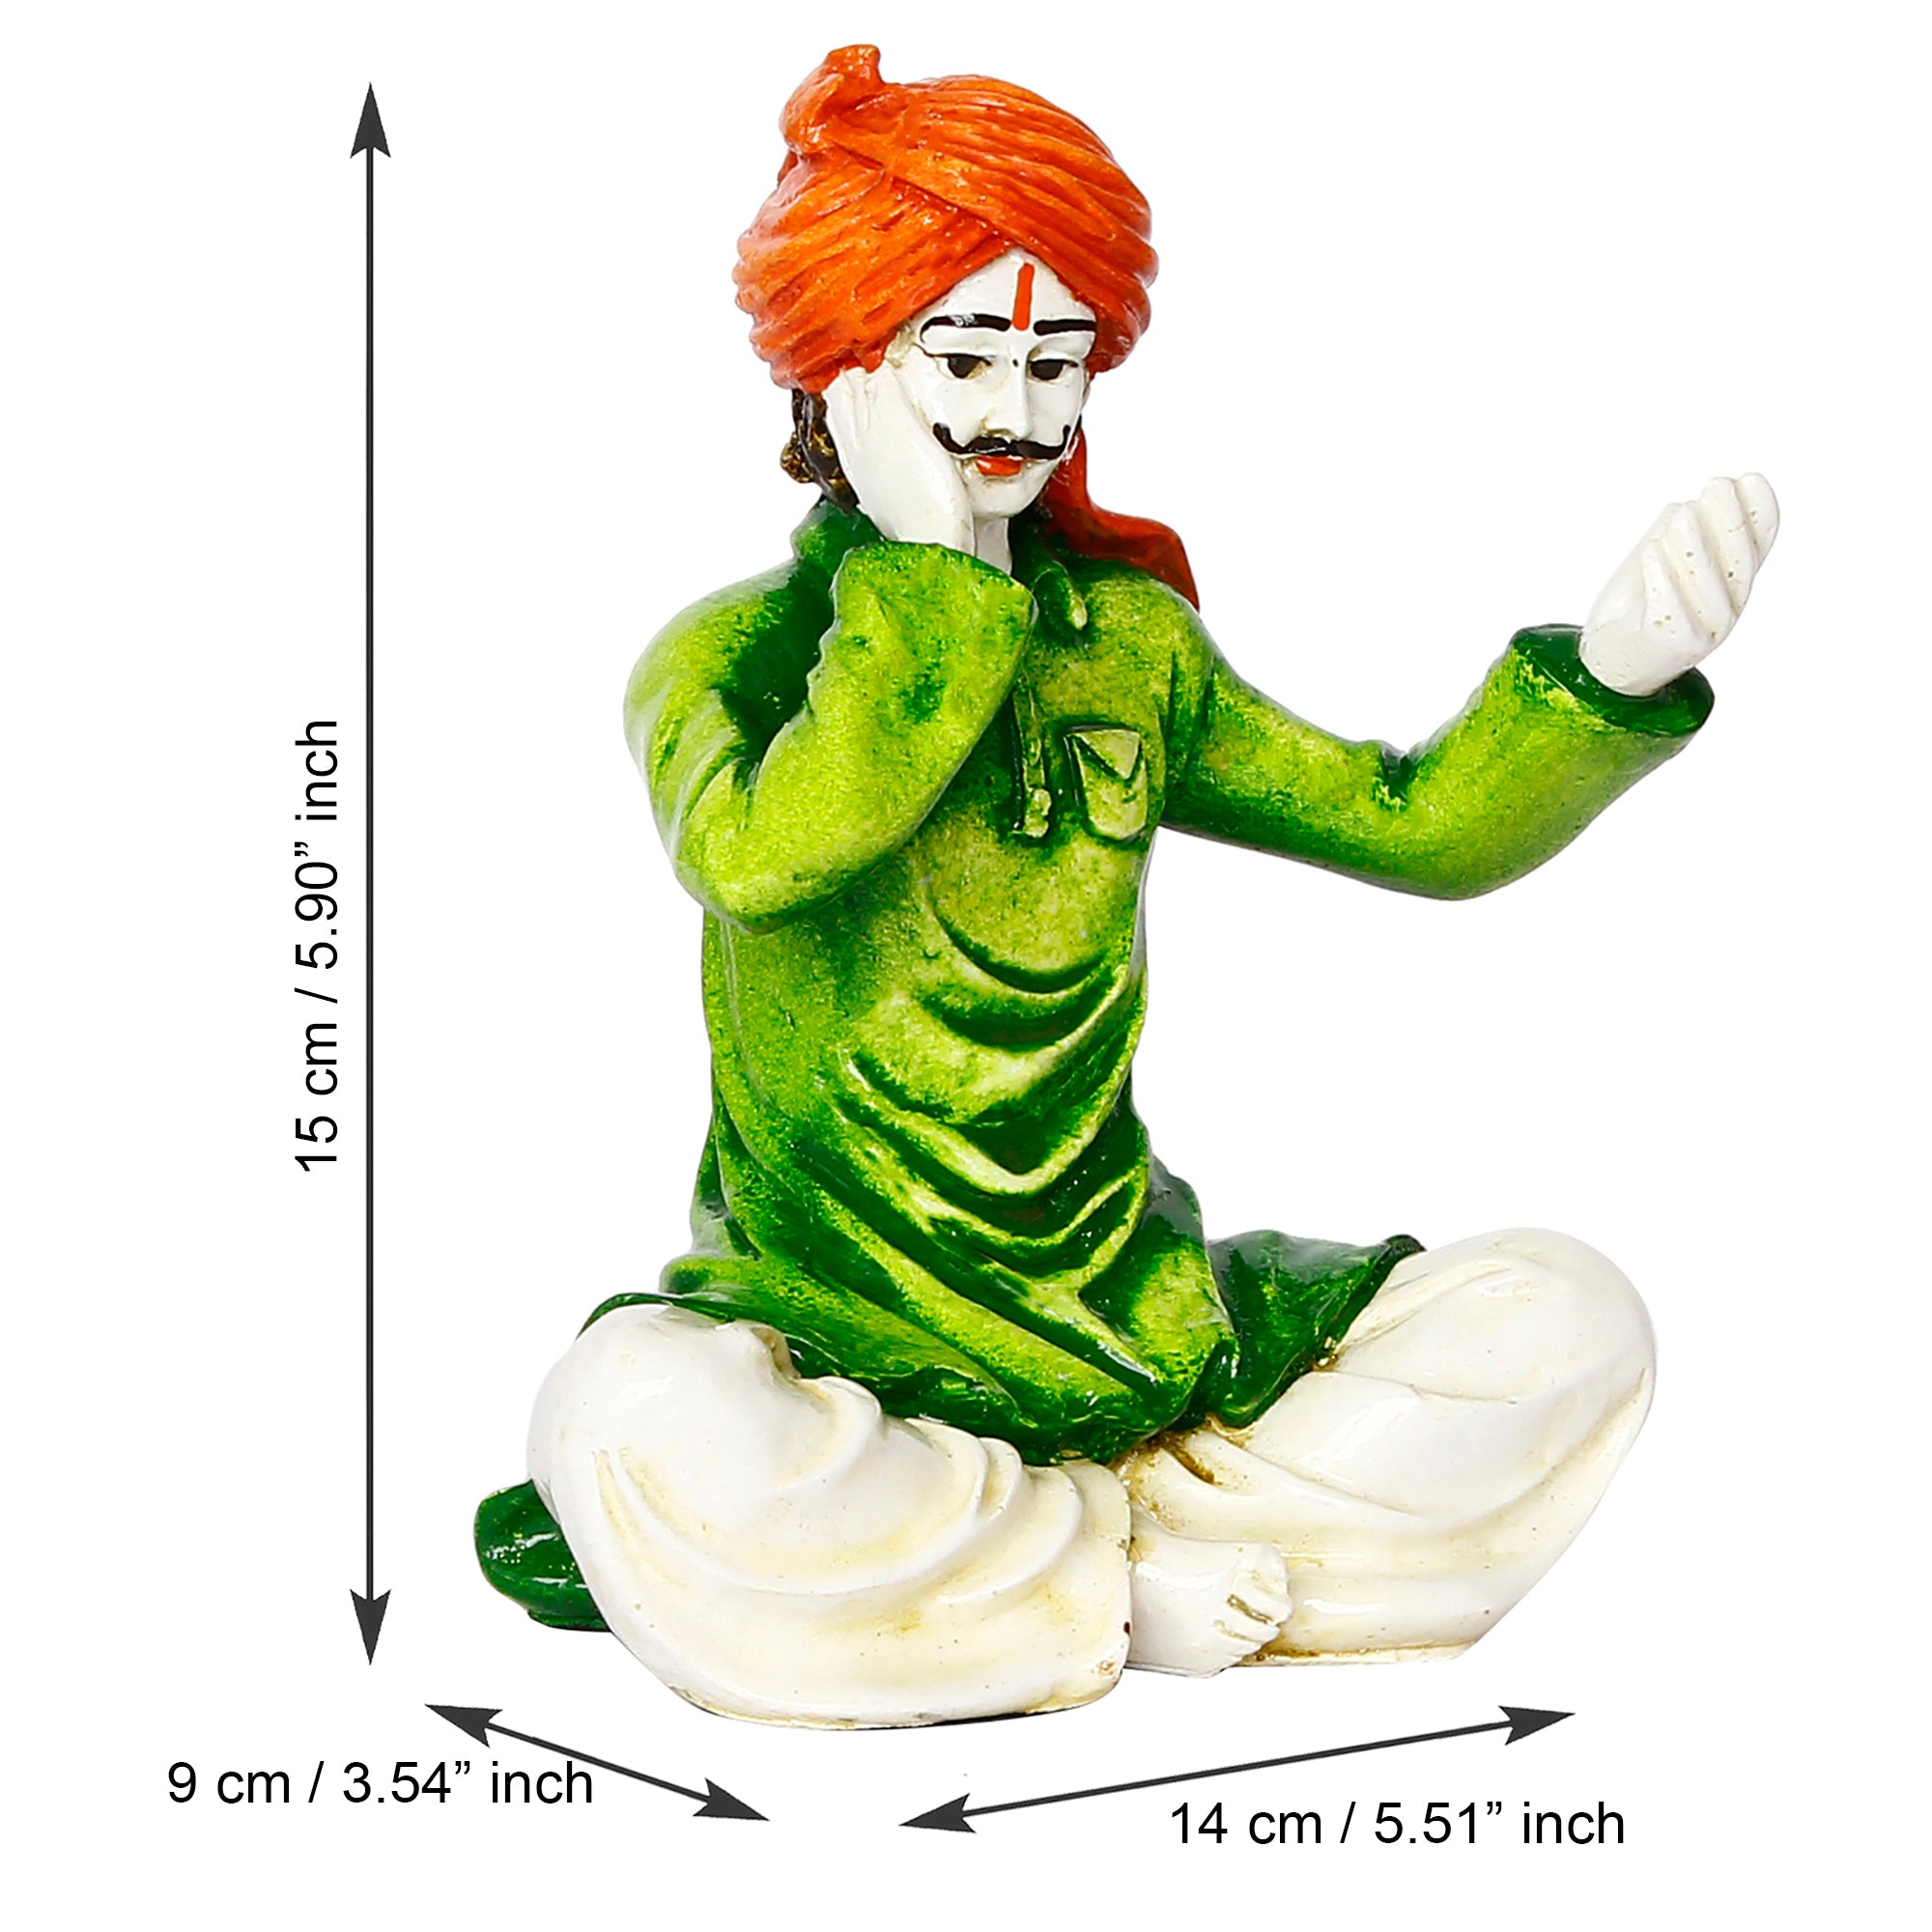 Polyresin Singing Rajasthani Man Statue Handcrafted Human Figurine Decorative Showpiece 3